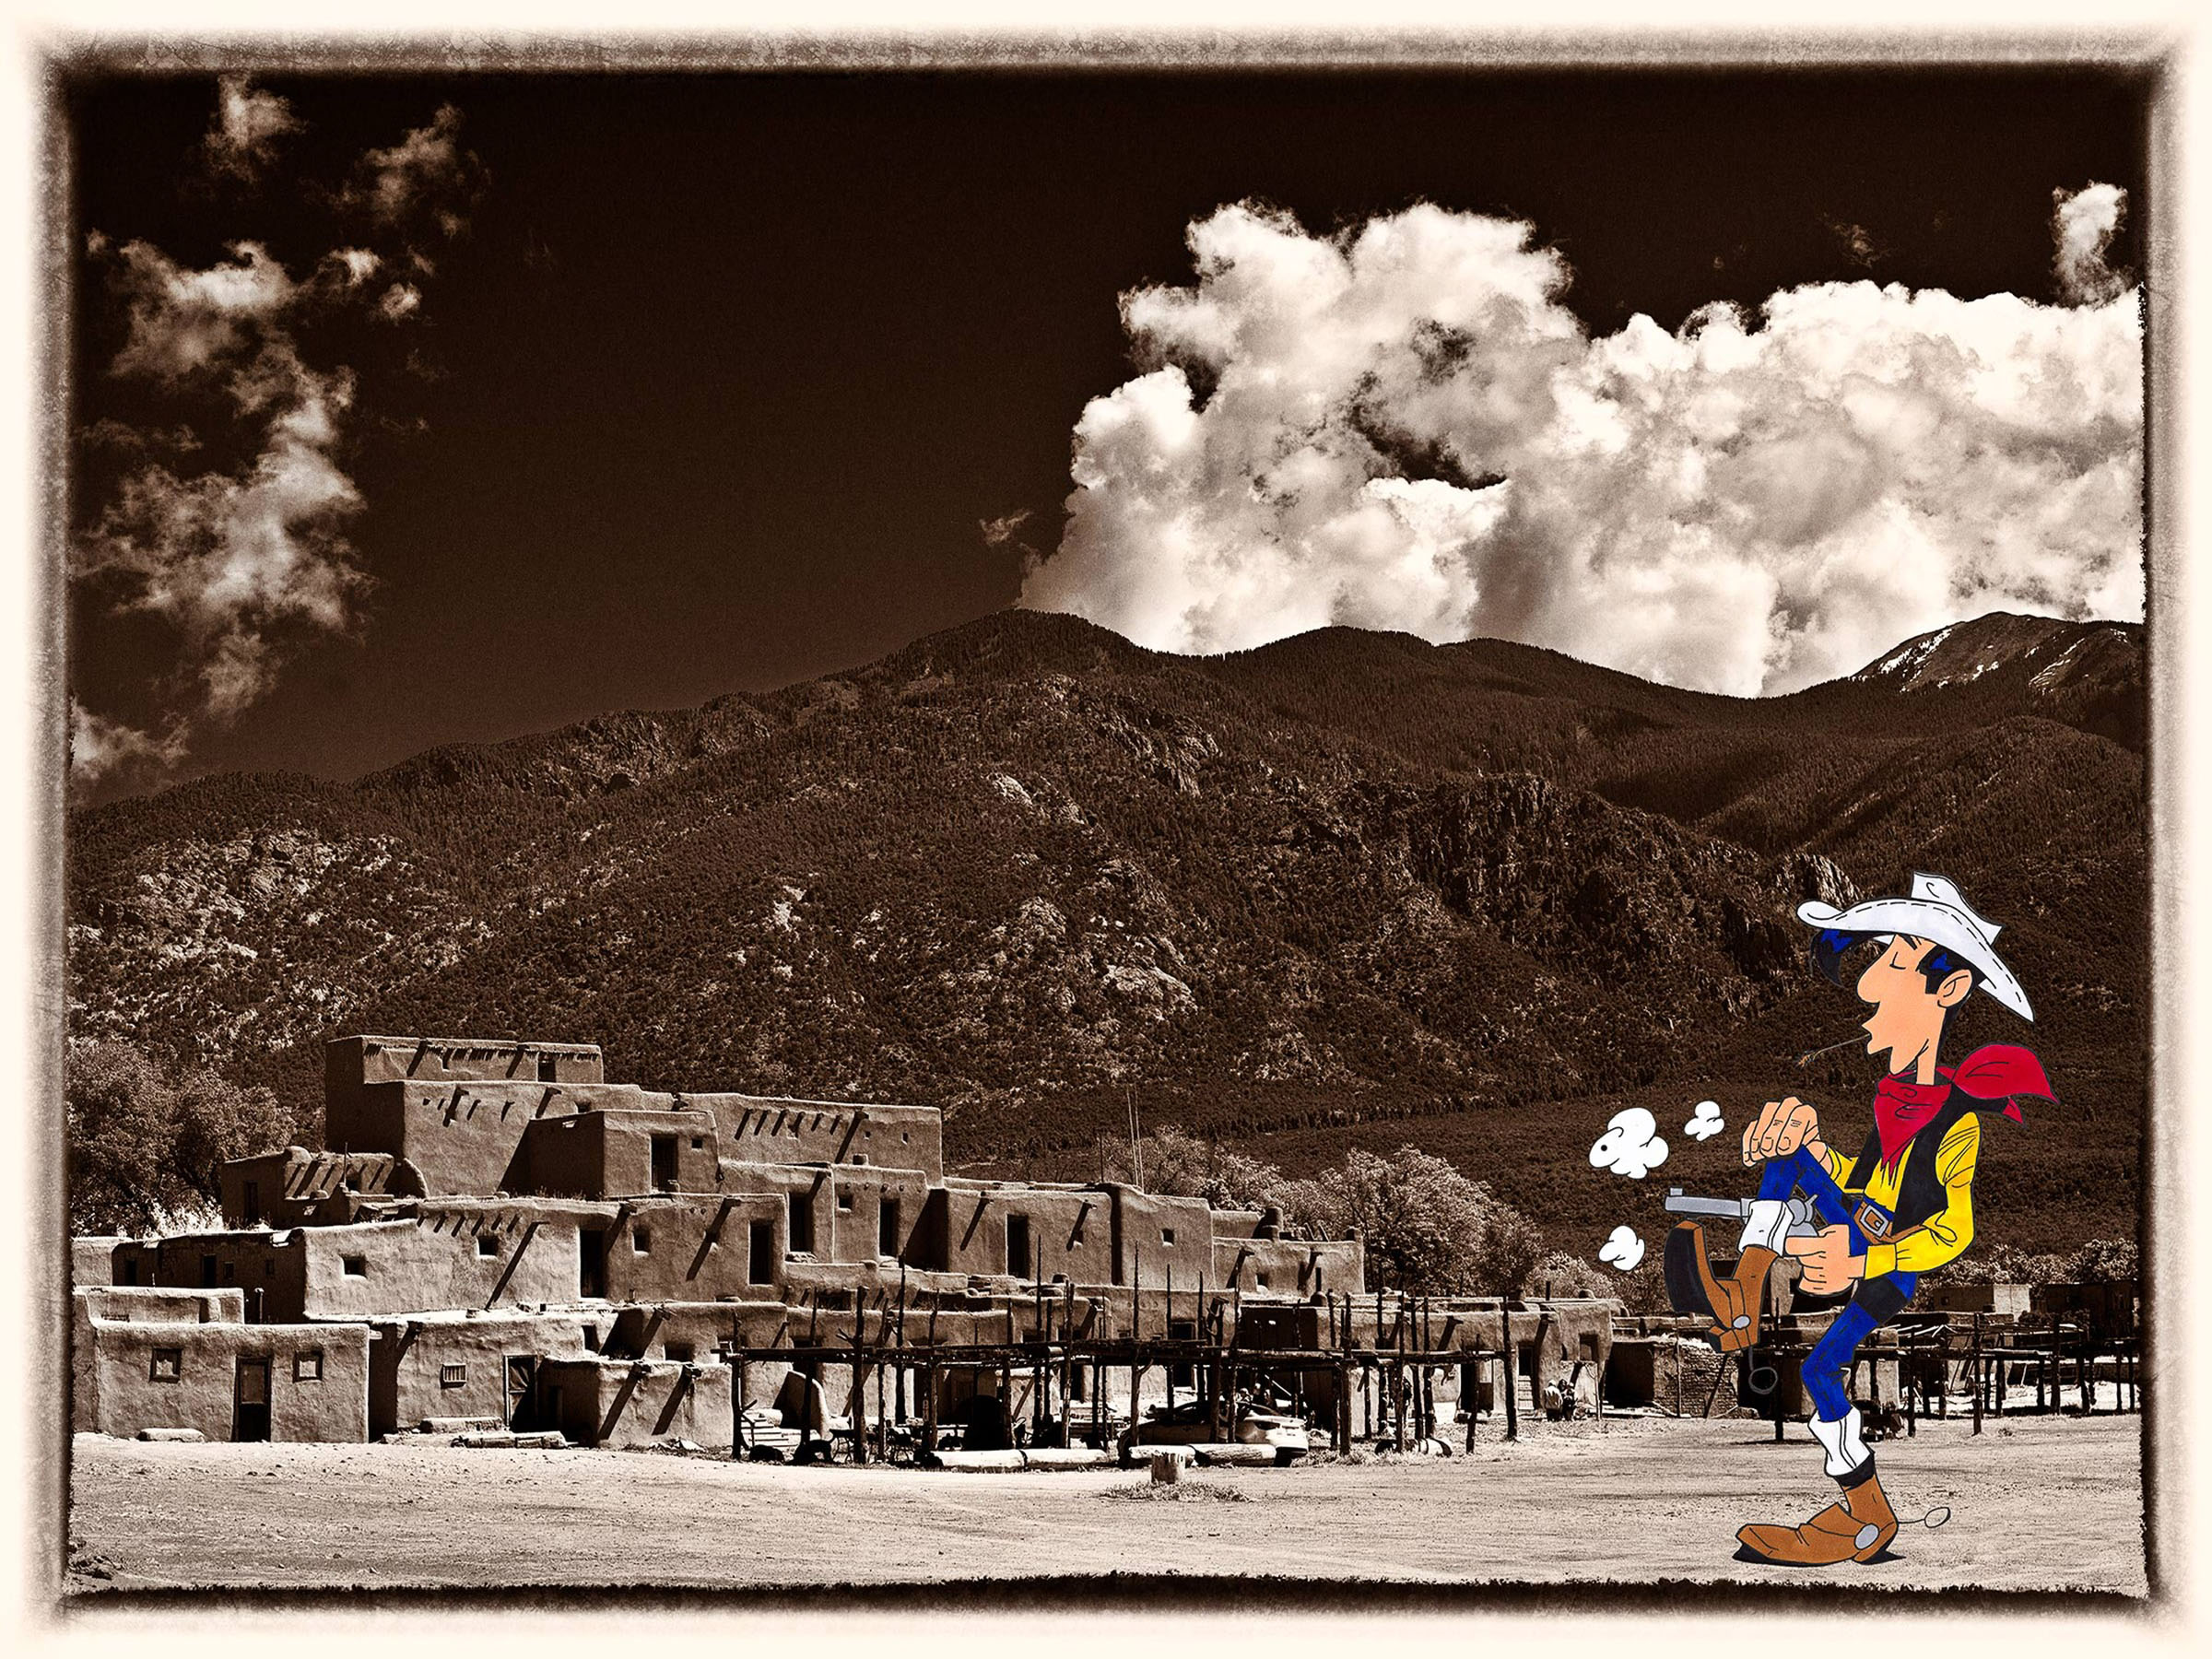 Lucky Luke, Shootout at the Taos Pueblo